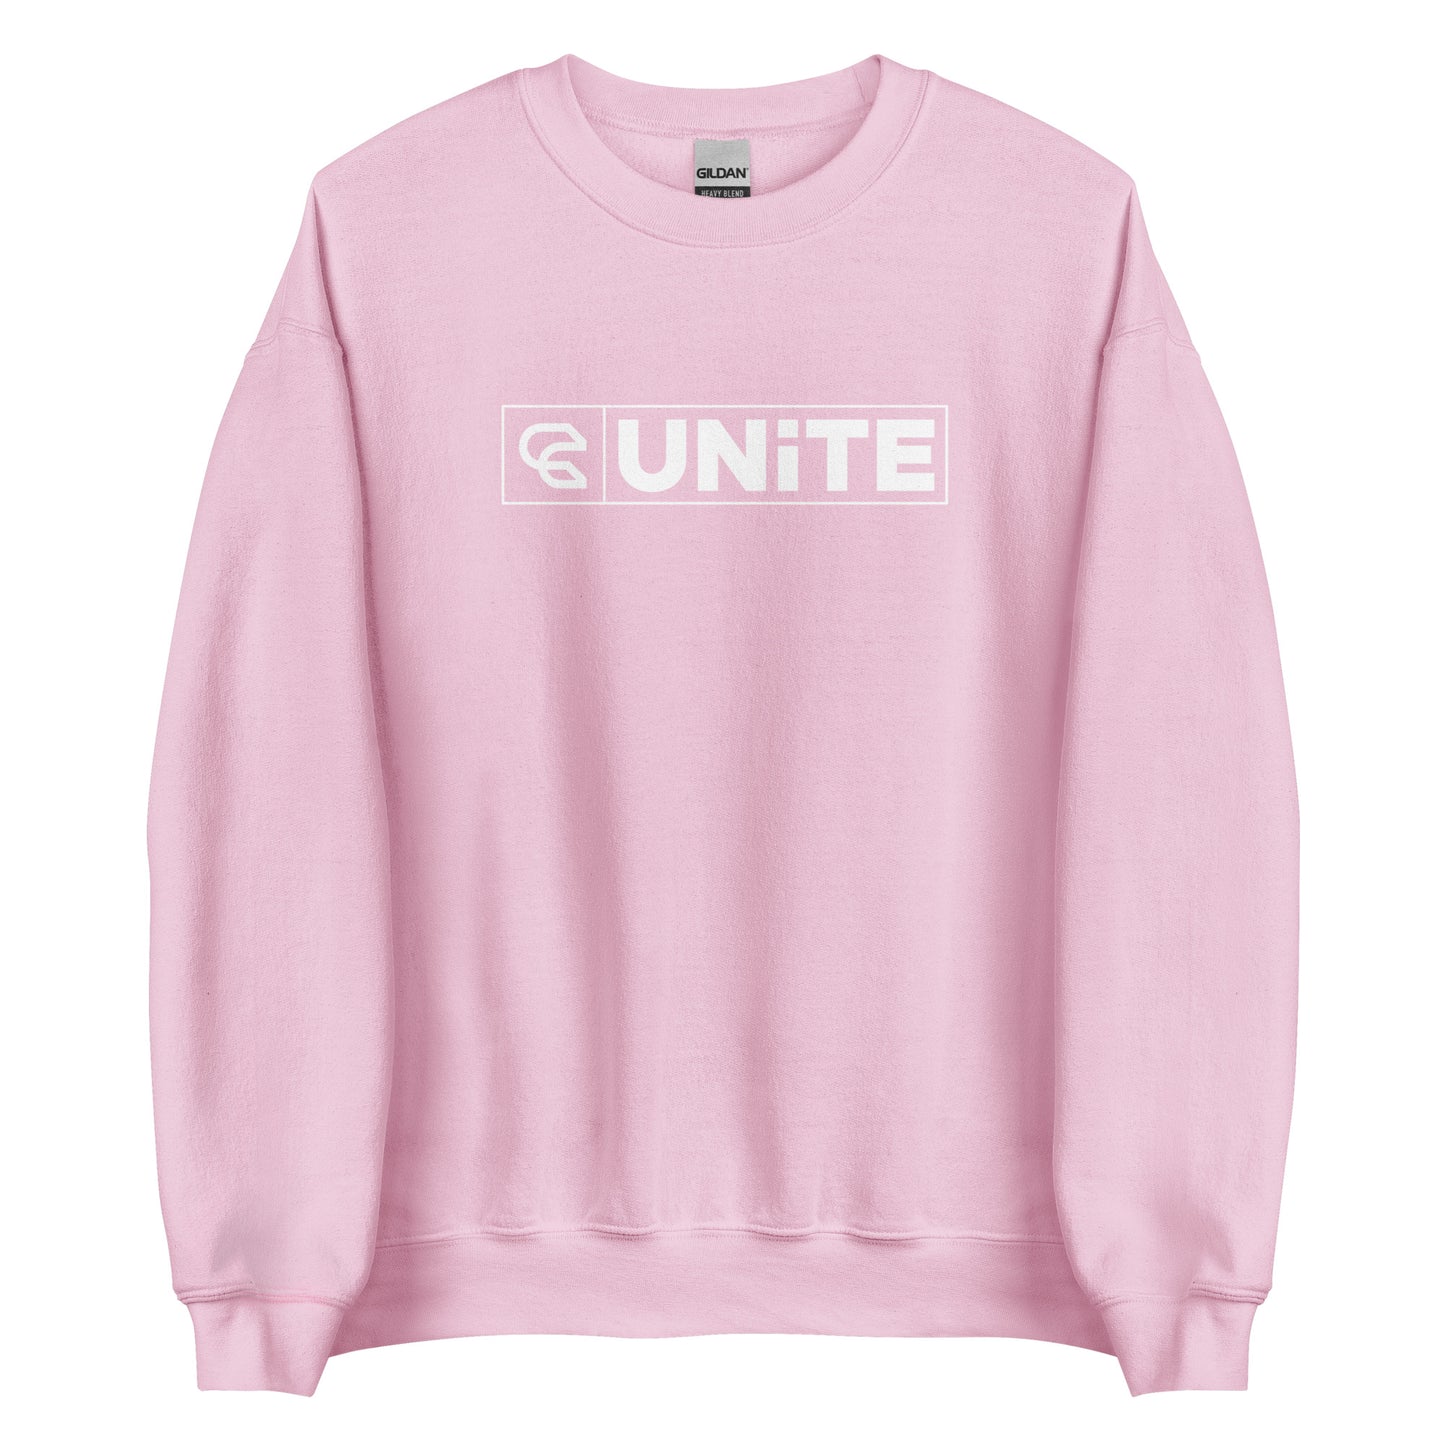 UNITE Crewneck Sweatshirt